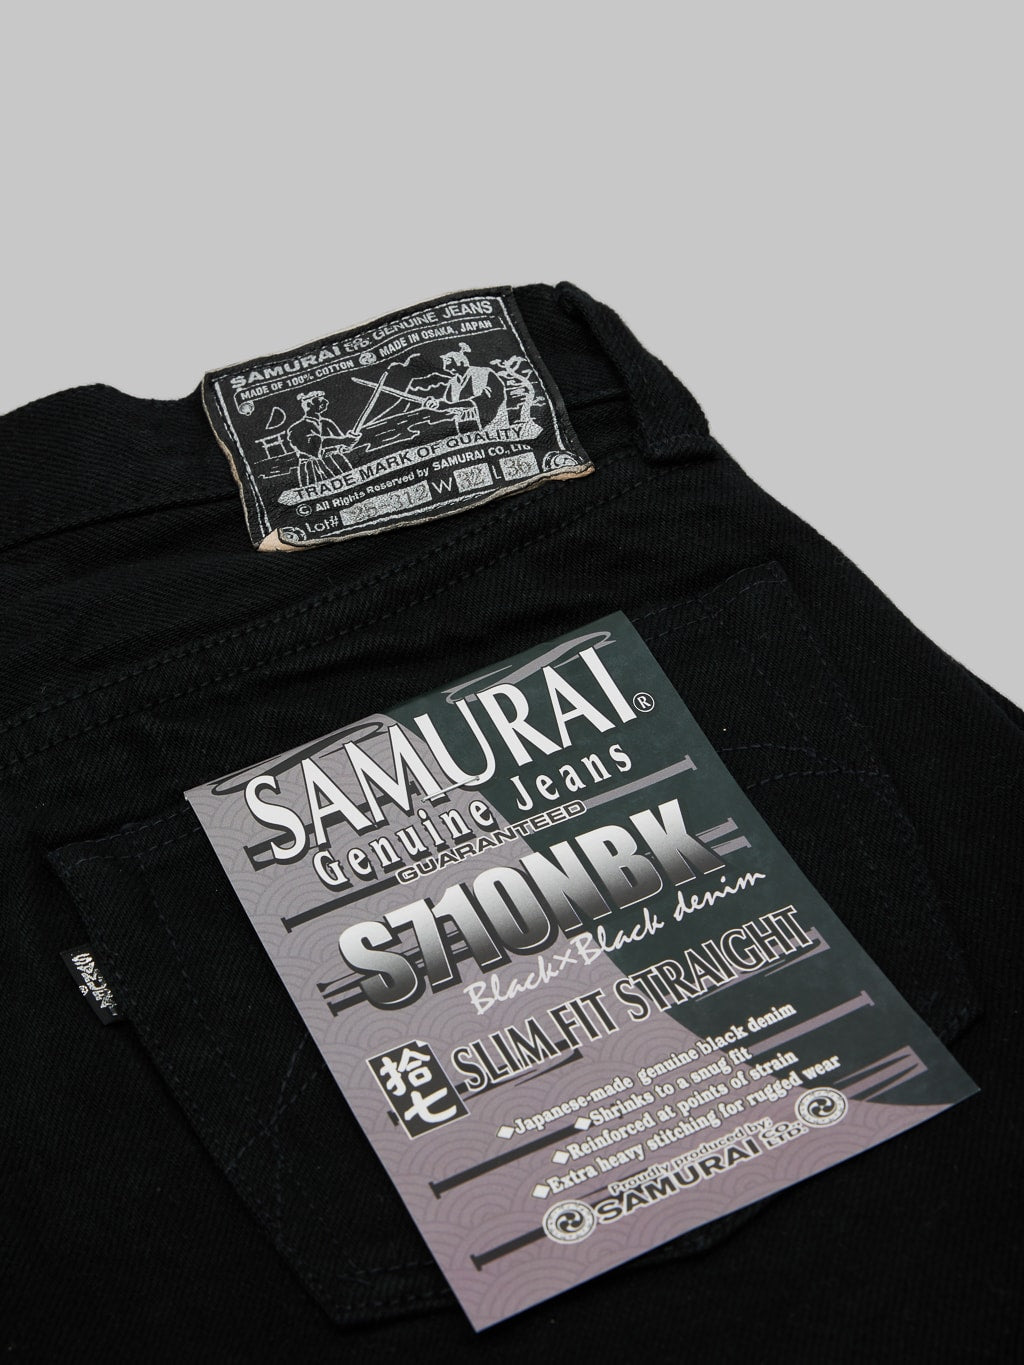 Samurai Jeans Color Fast Black x Black Jeans  made in japan